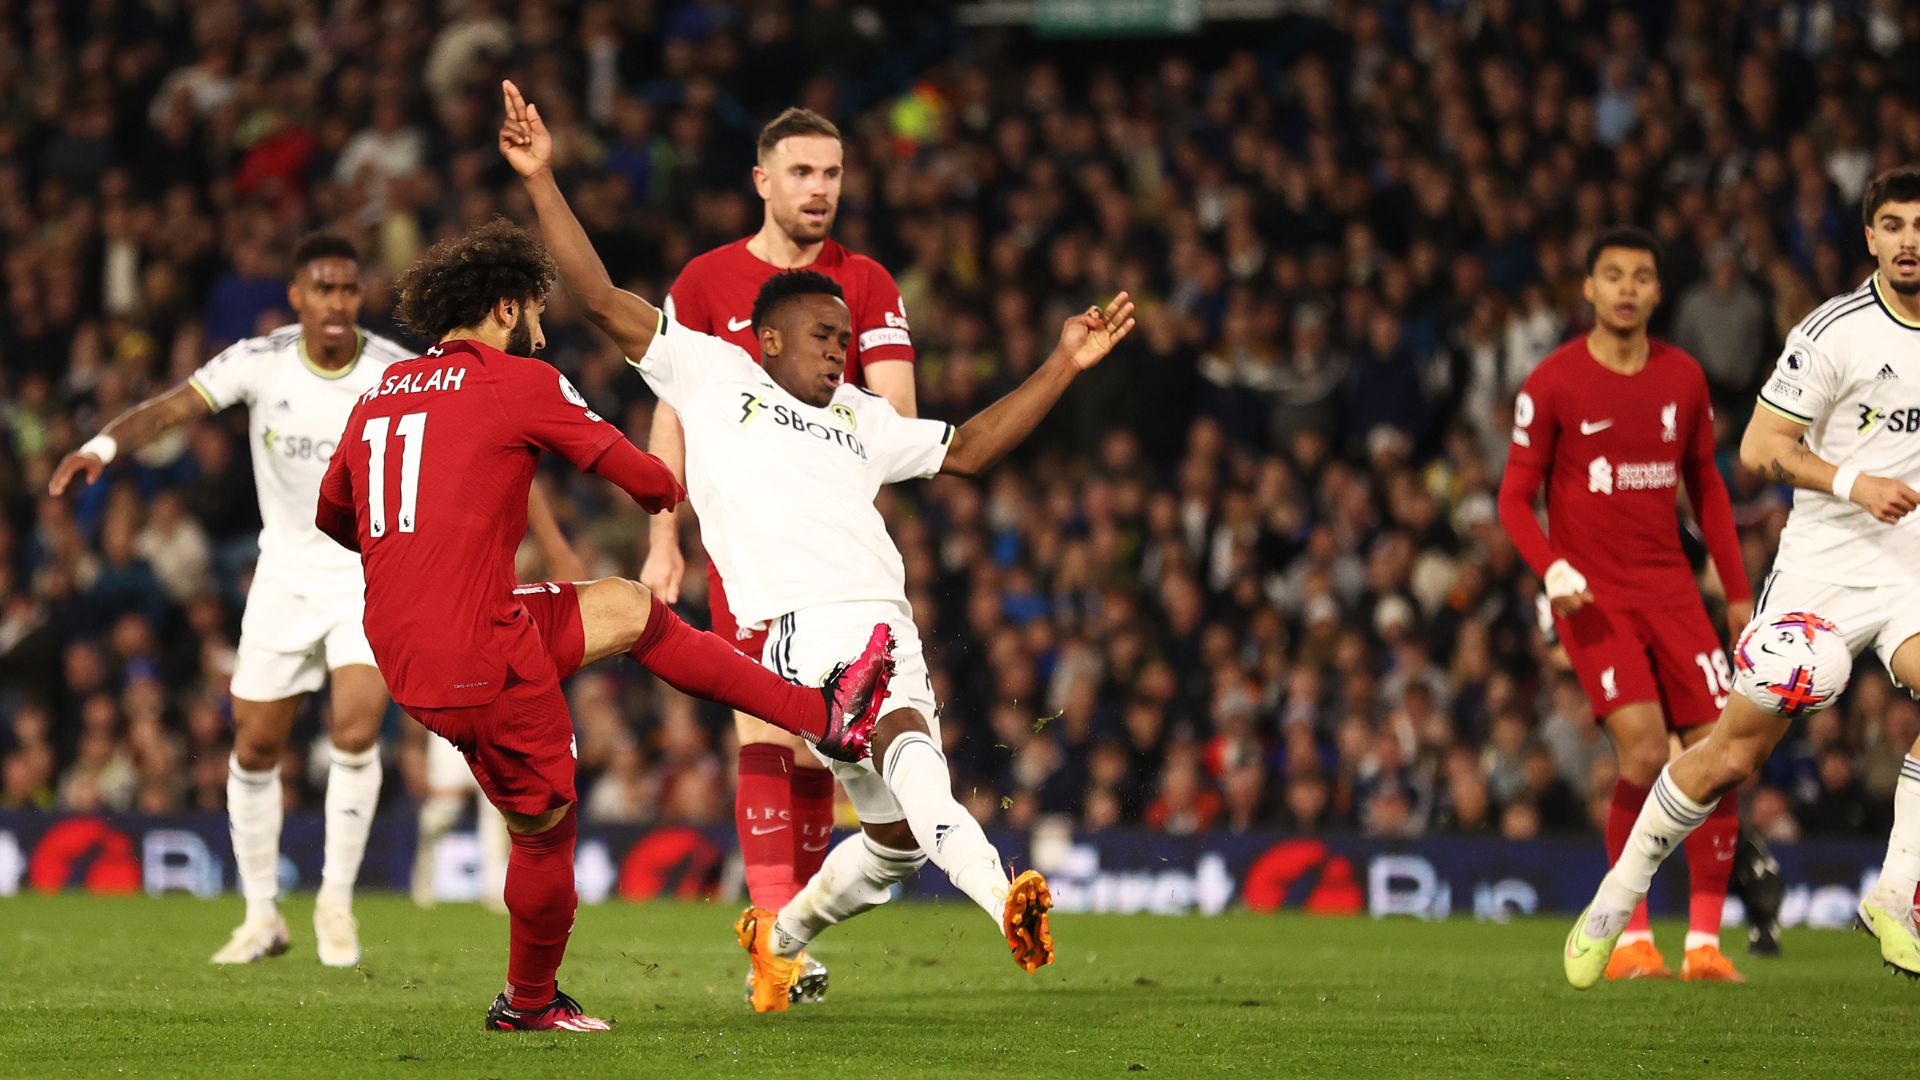 Momento do segundo gol de Salah na partida (Crédito: Getty Images) 